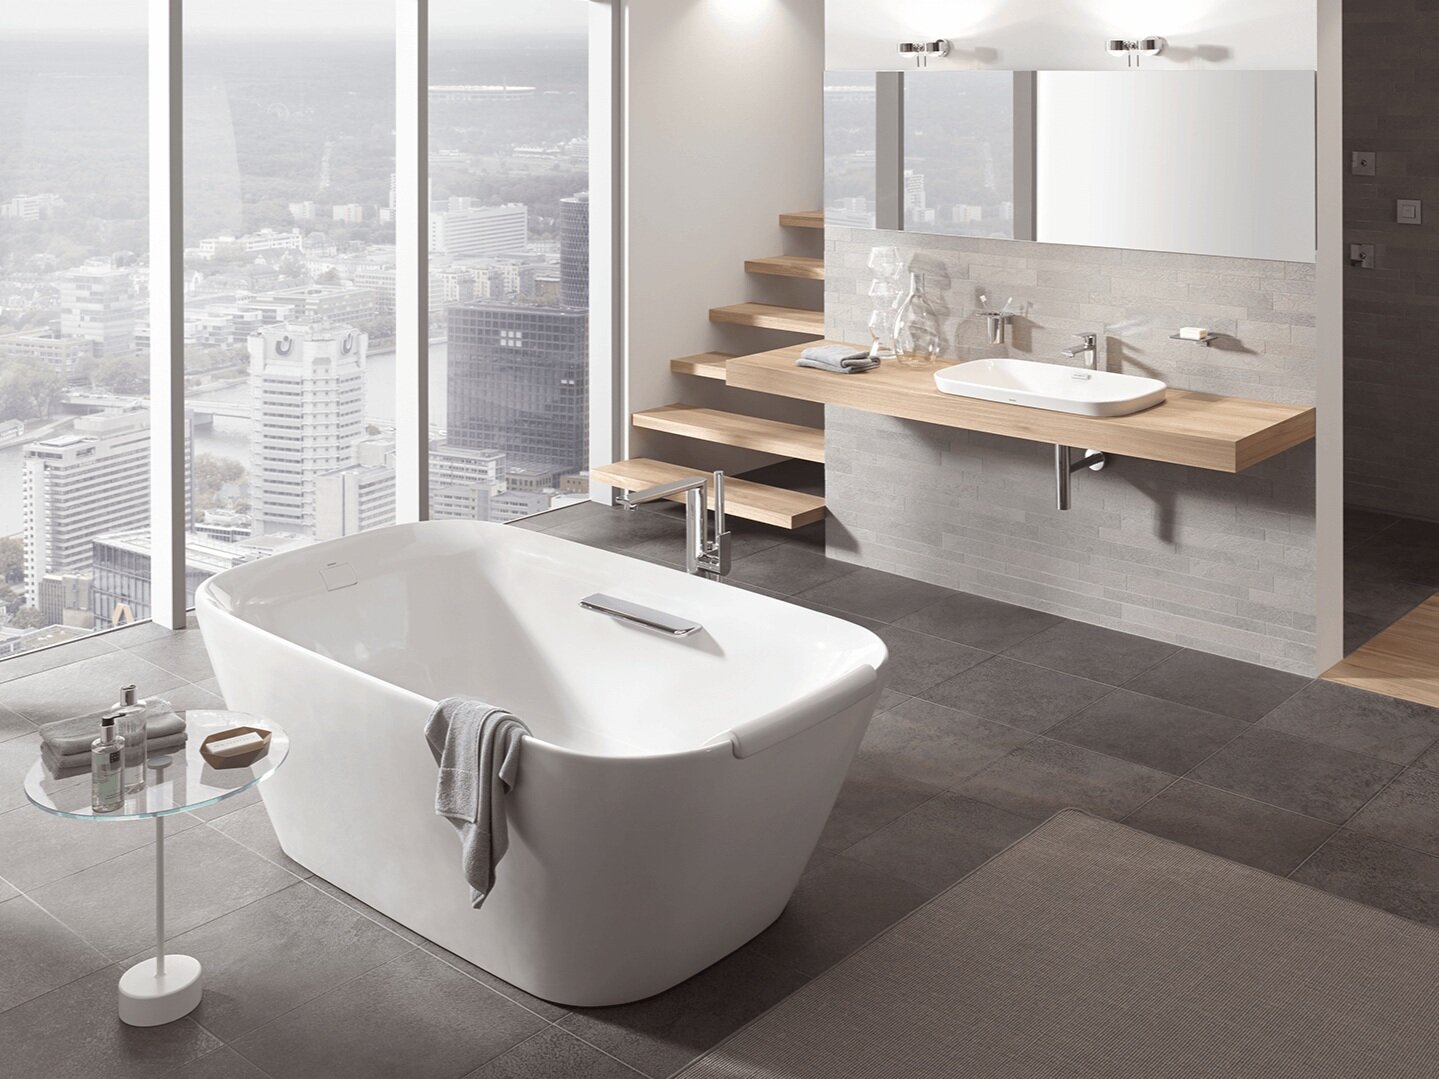 Toto_Luxury-bathroom-freestanding-bath.jpg